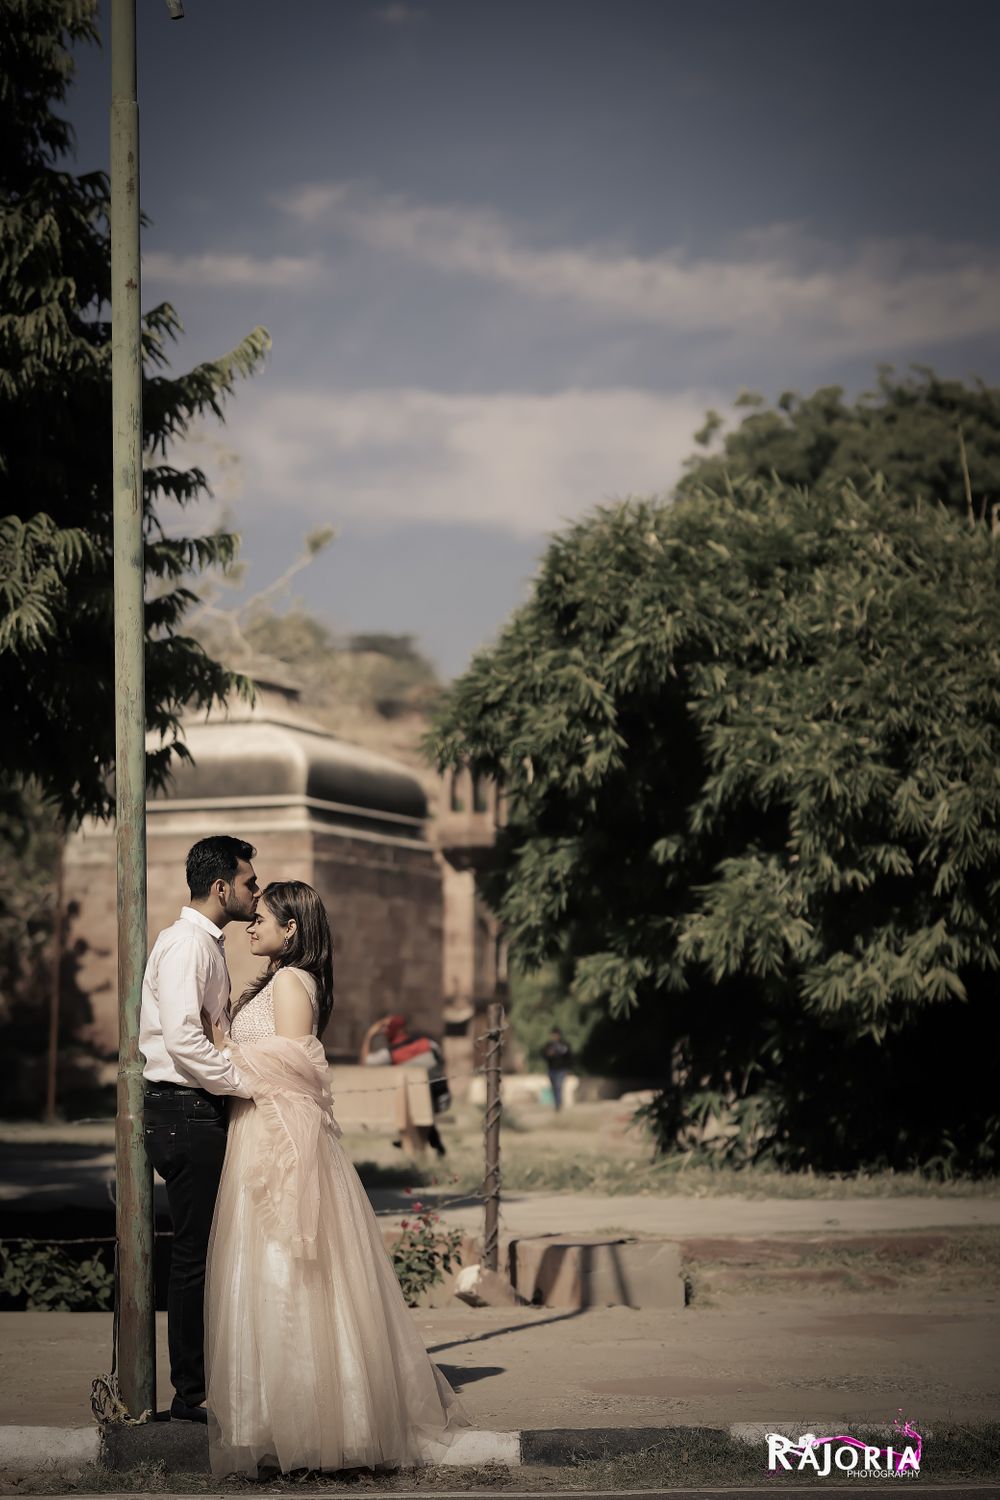 Photo By Rajoria Photography - Pre Wedding Photographers